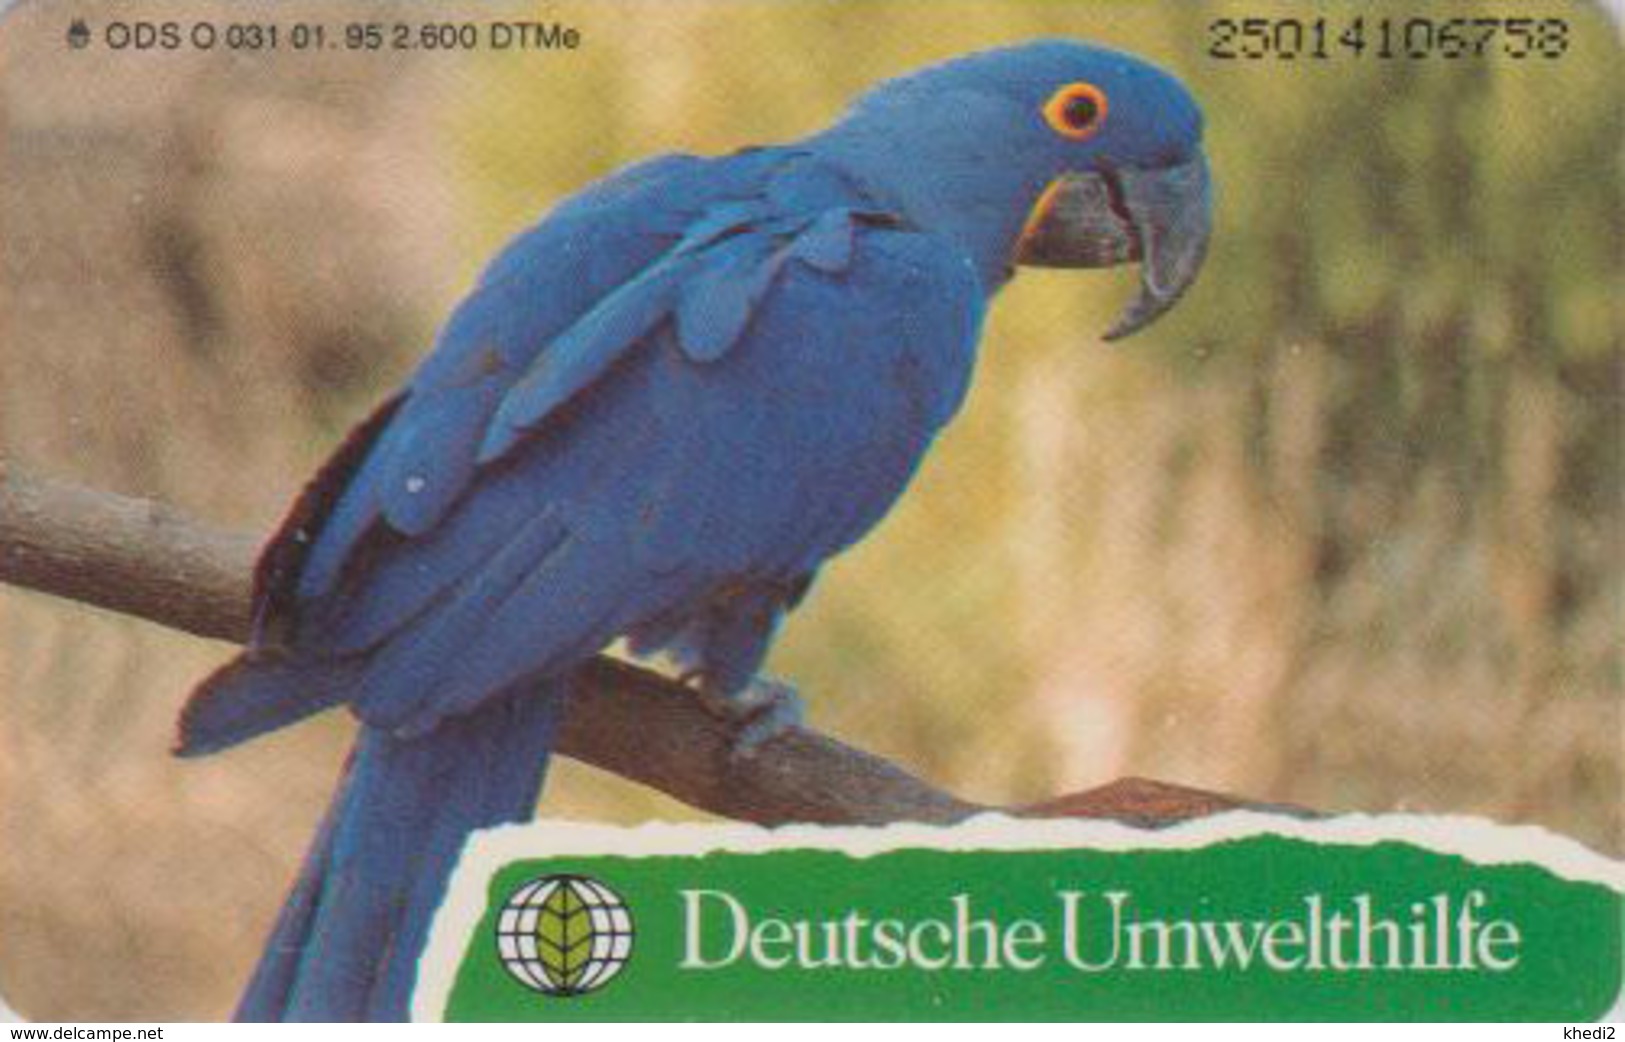 Télécarte à Puce Allemagne - DEUTSCHE UMWELTHILFE - ANIMAL - OISEAU ARA PERROQUET PARROT BIRD - Chip Phonecard - Loros